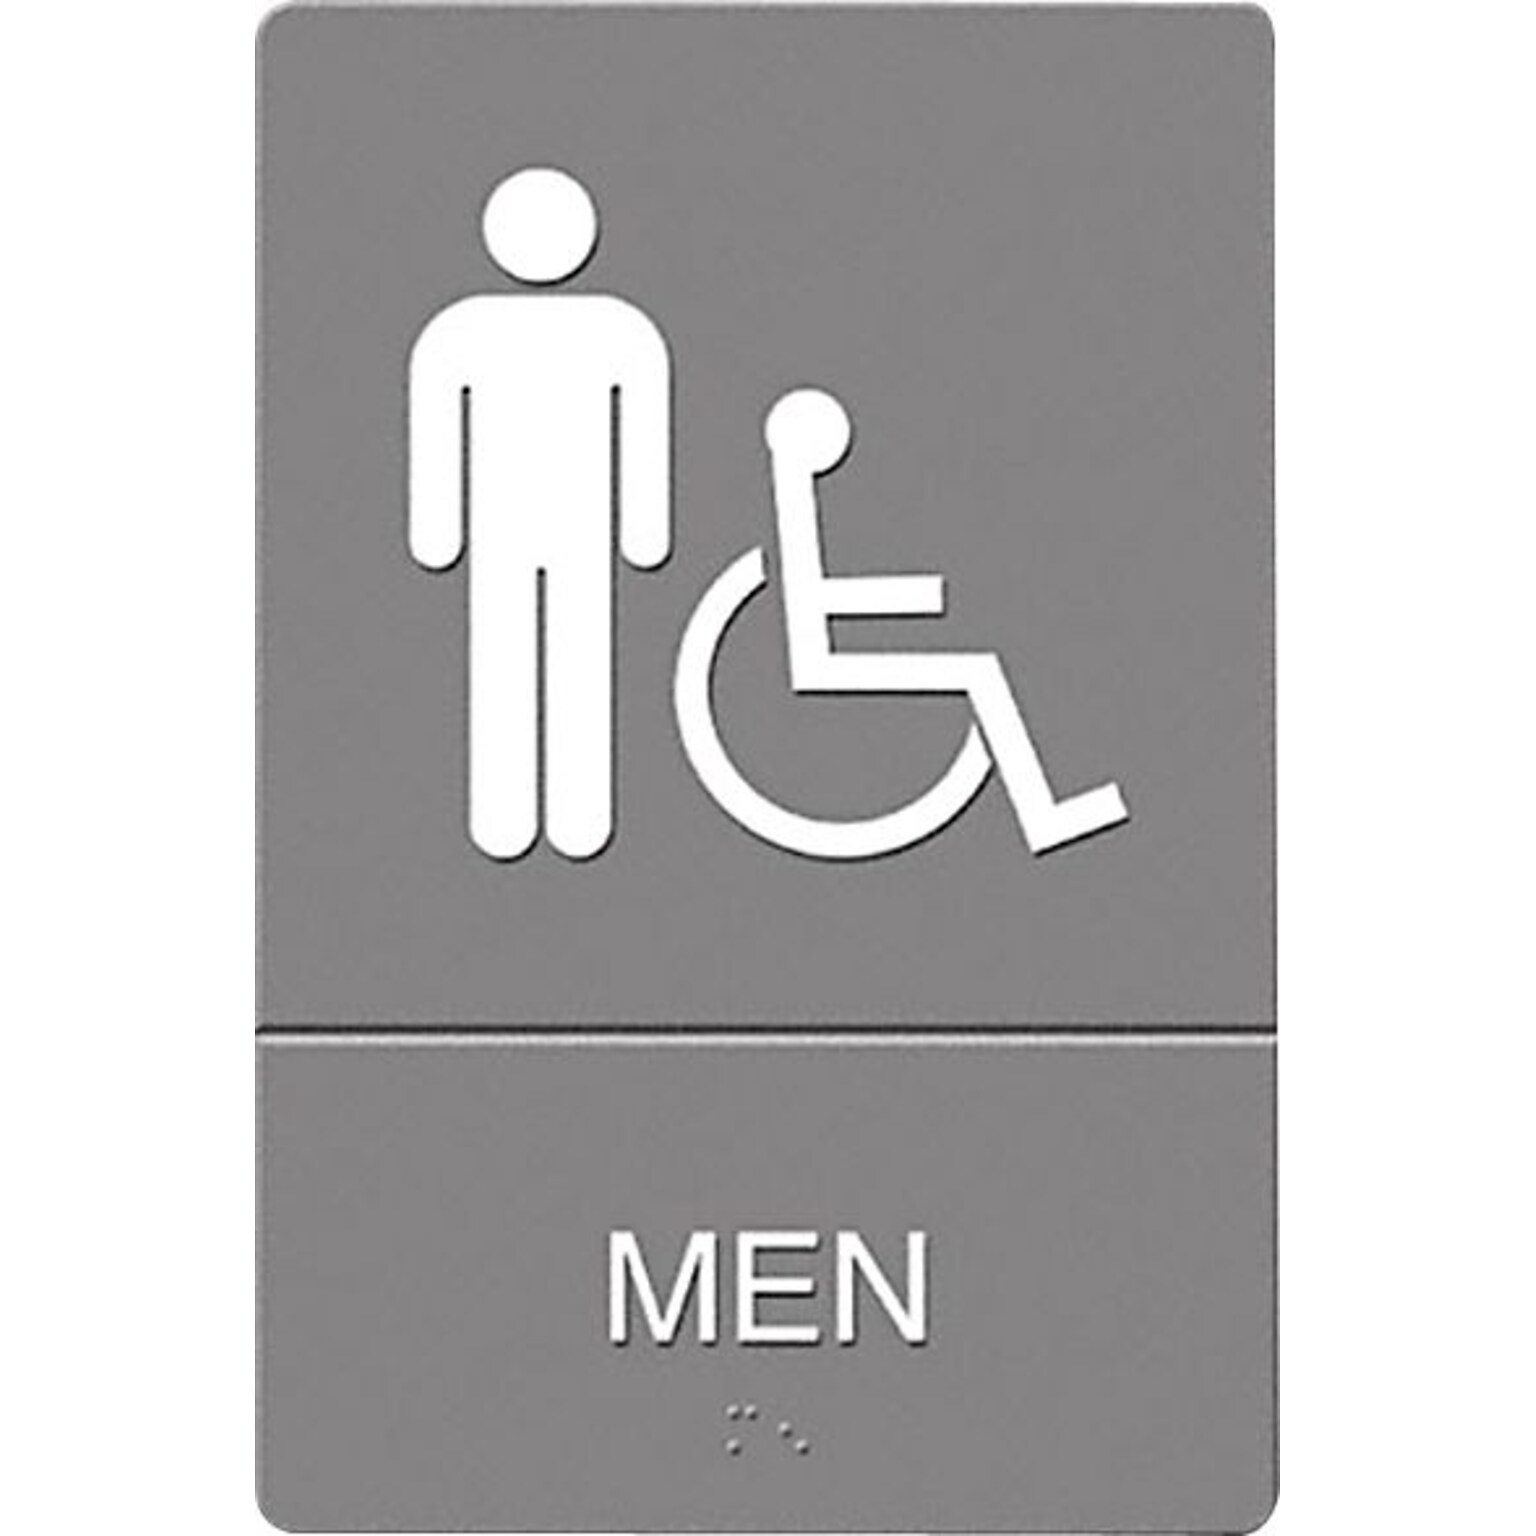 U.S. Stamp & Sign Headline ADA MEN Wheelchair Accessible Restroom Sign, 6 x 9, Gray/White (UST4815)